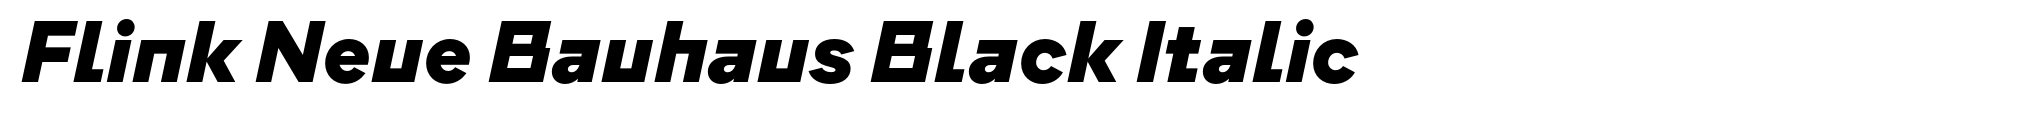 Flink Neue Bauhaus Black Italic image